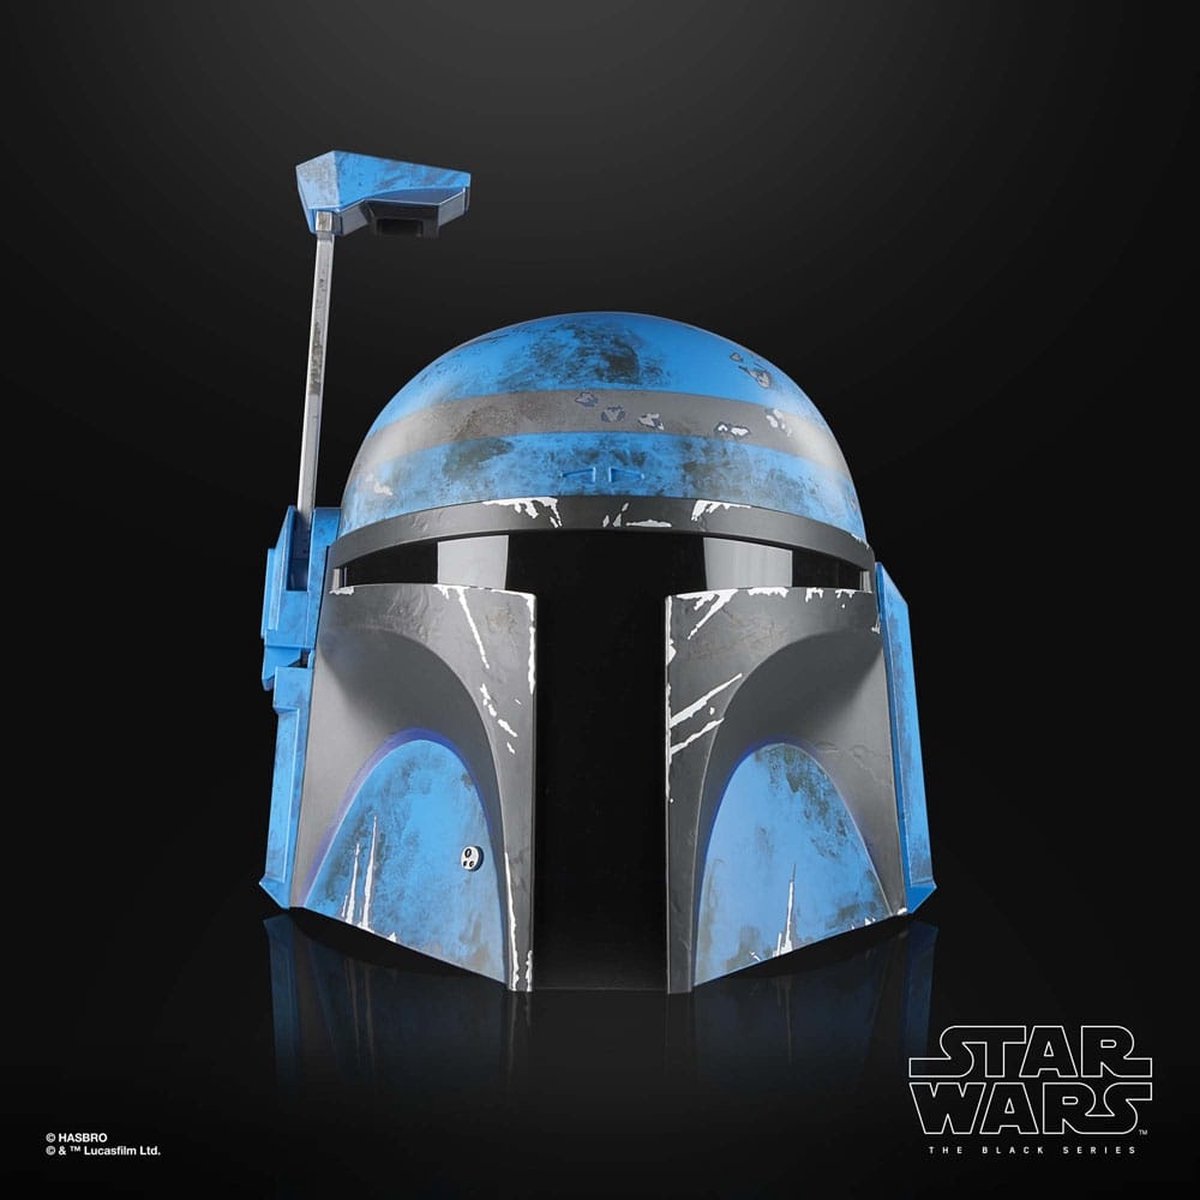 Figurine articulée casque Star Wars Black Series 